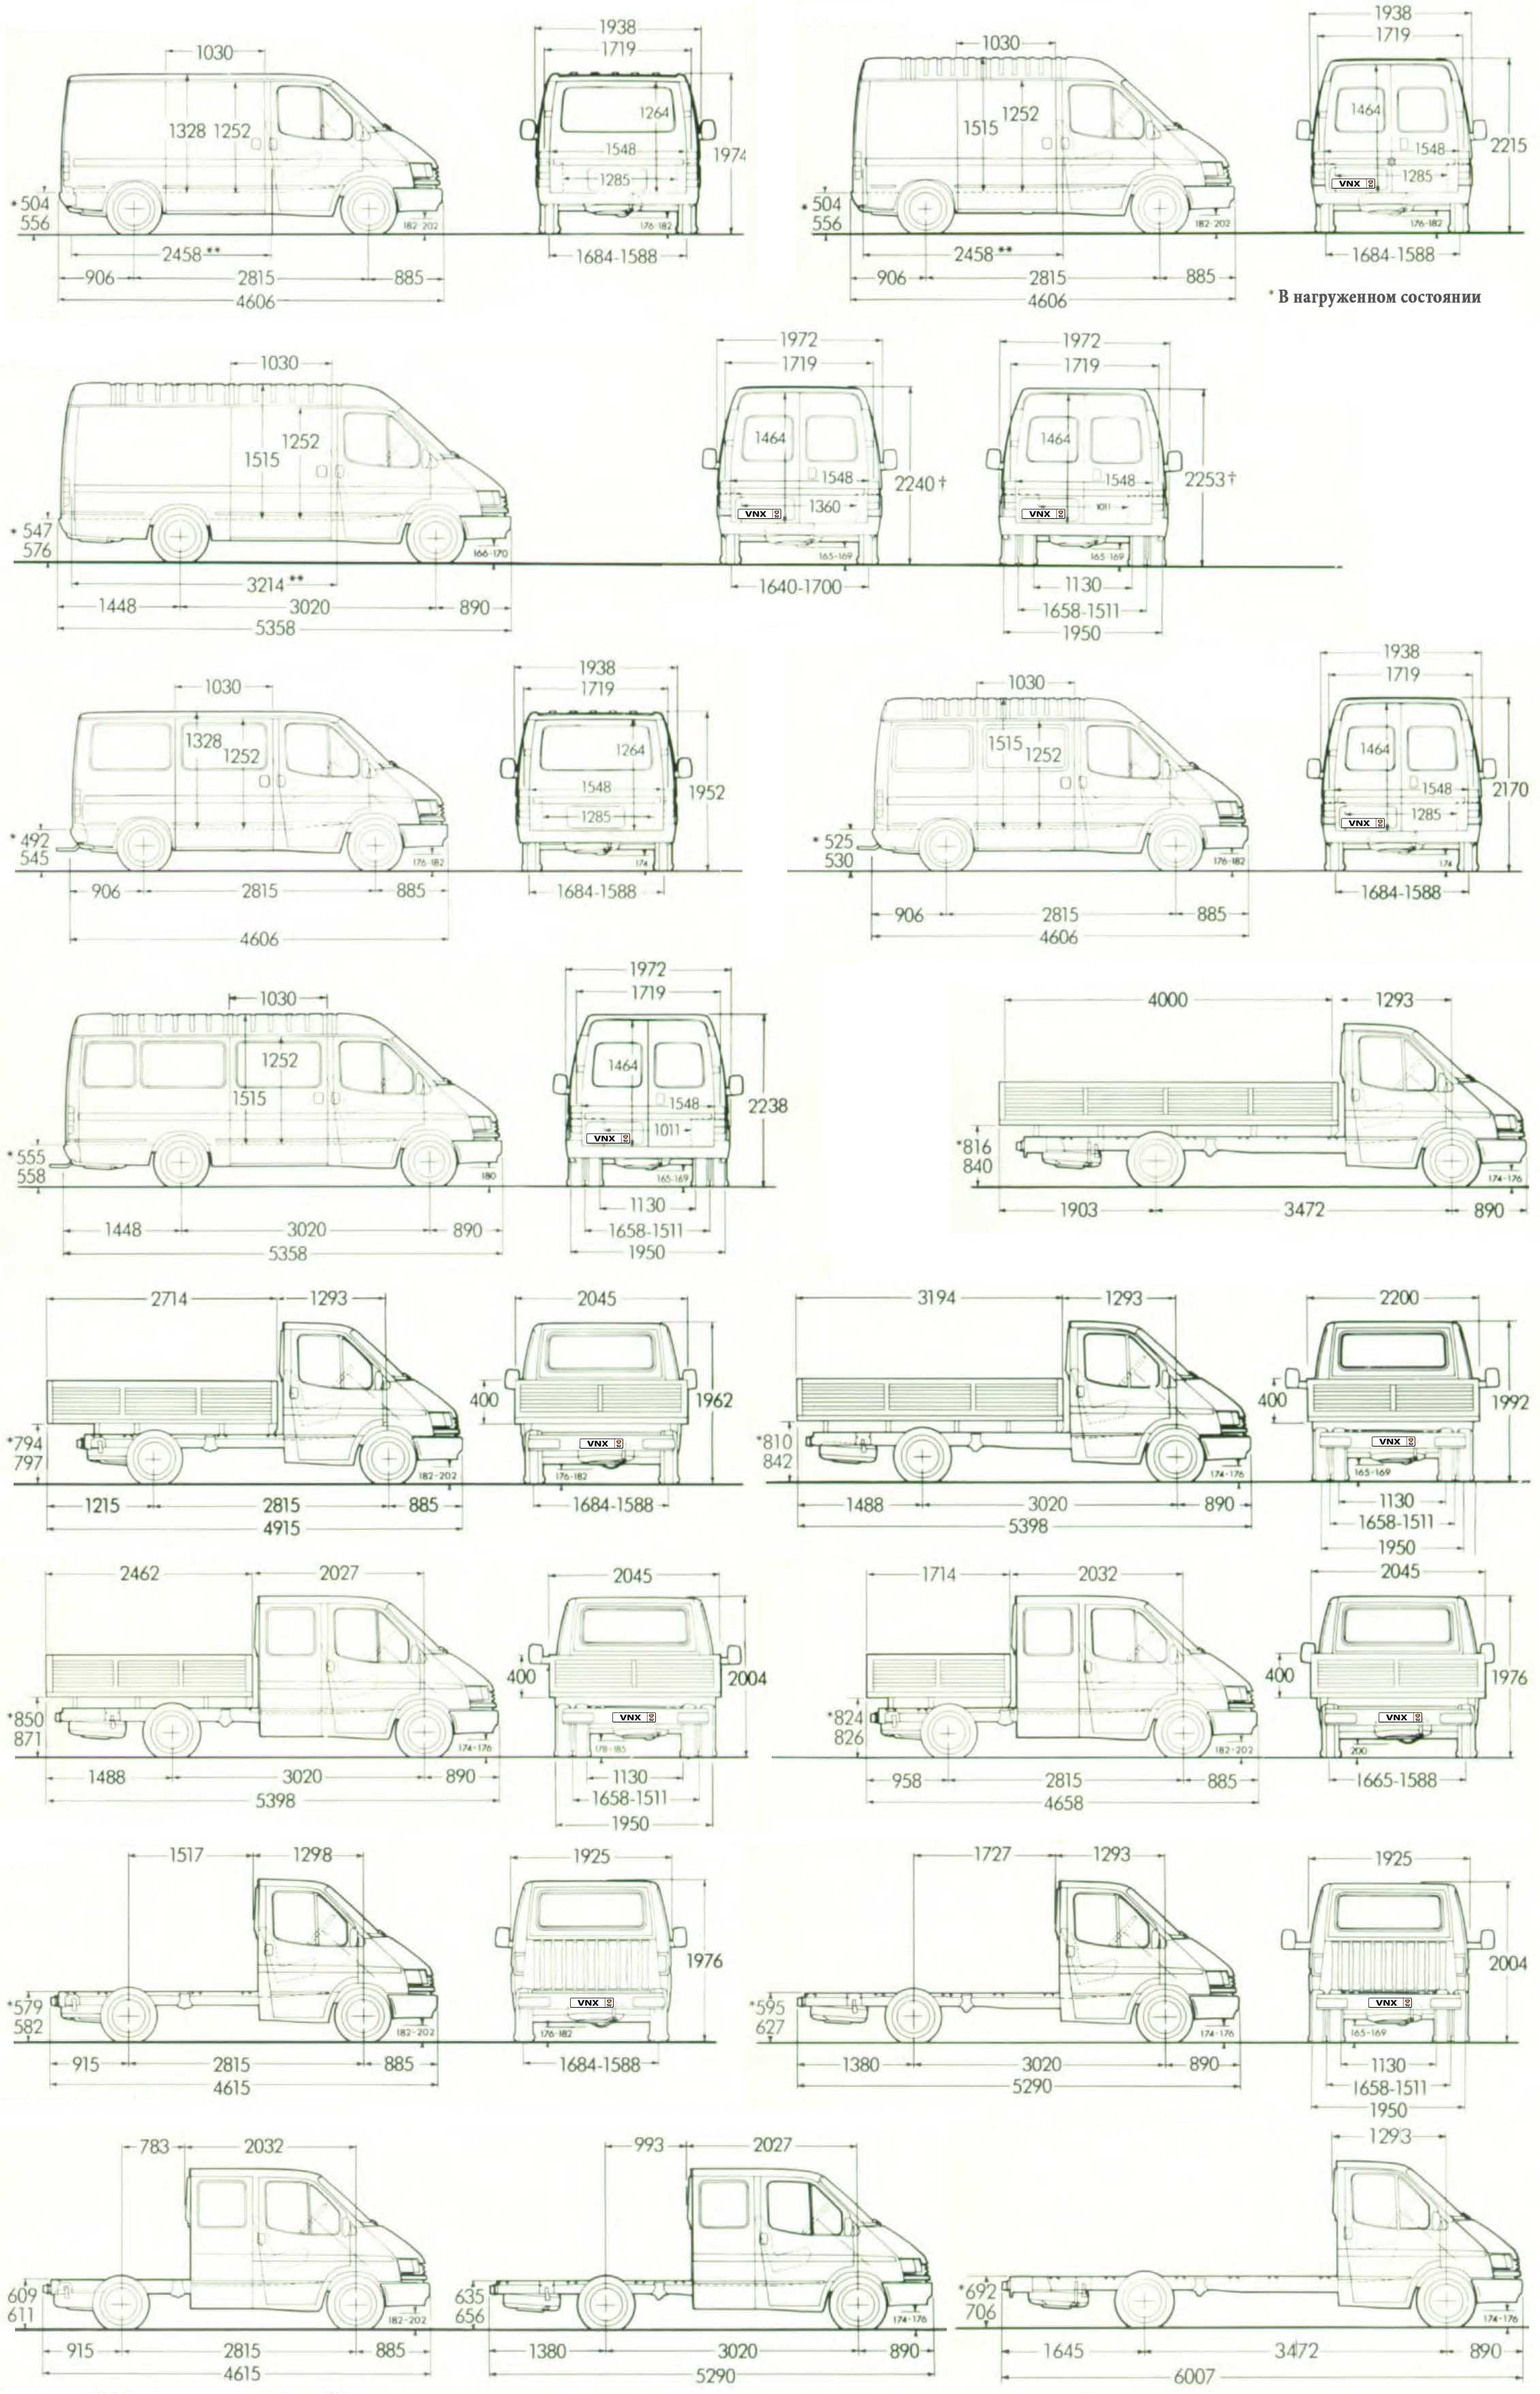 Габаритные размеры Форд Транзит (dimensions Ford Transit 1986-1990)